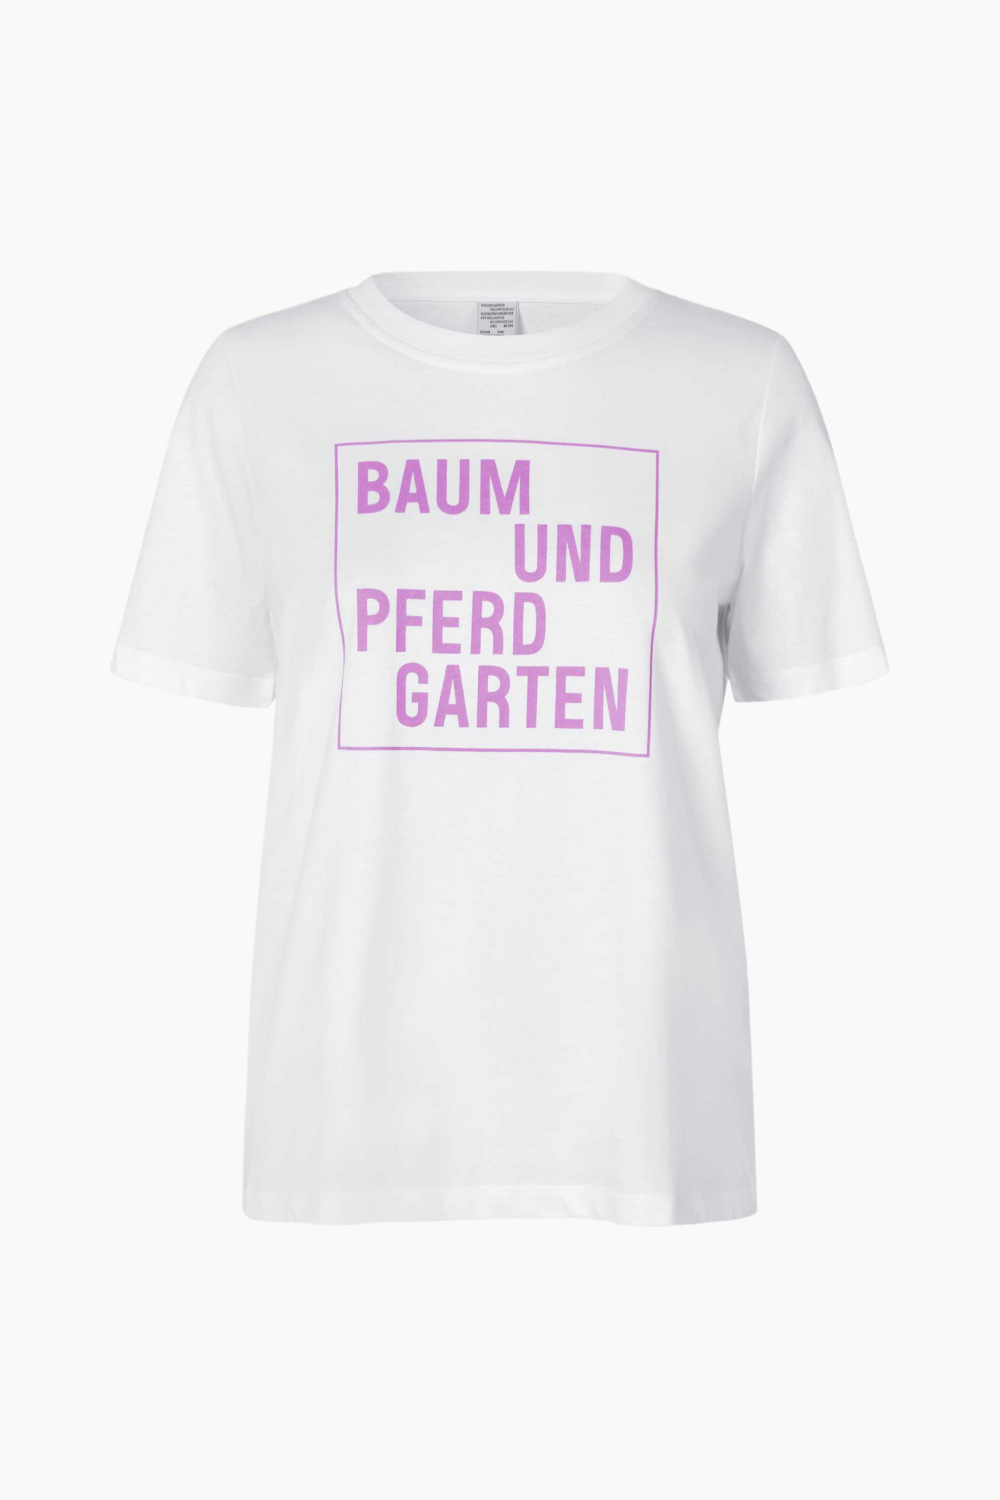 Se Jawo T-Shirt - Orchid Logo Box - Baum und Pferdgarten - Hvid L hos QNTS.dk